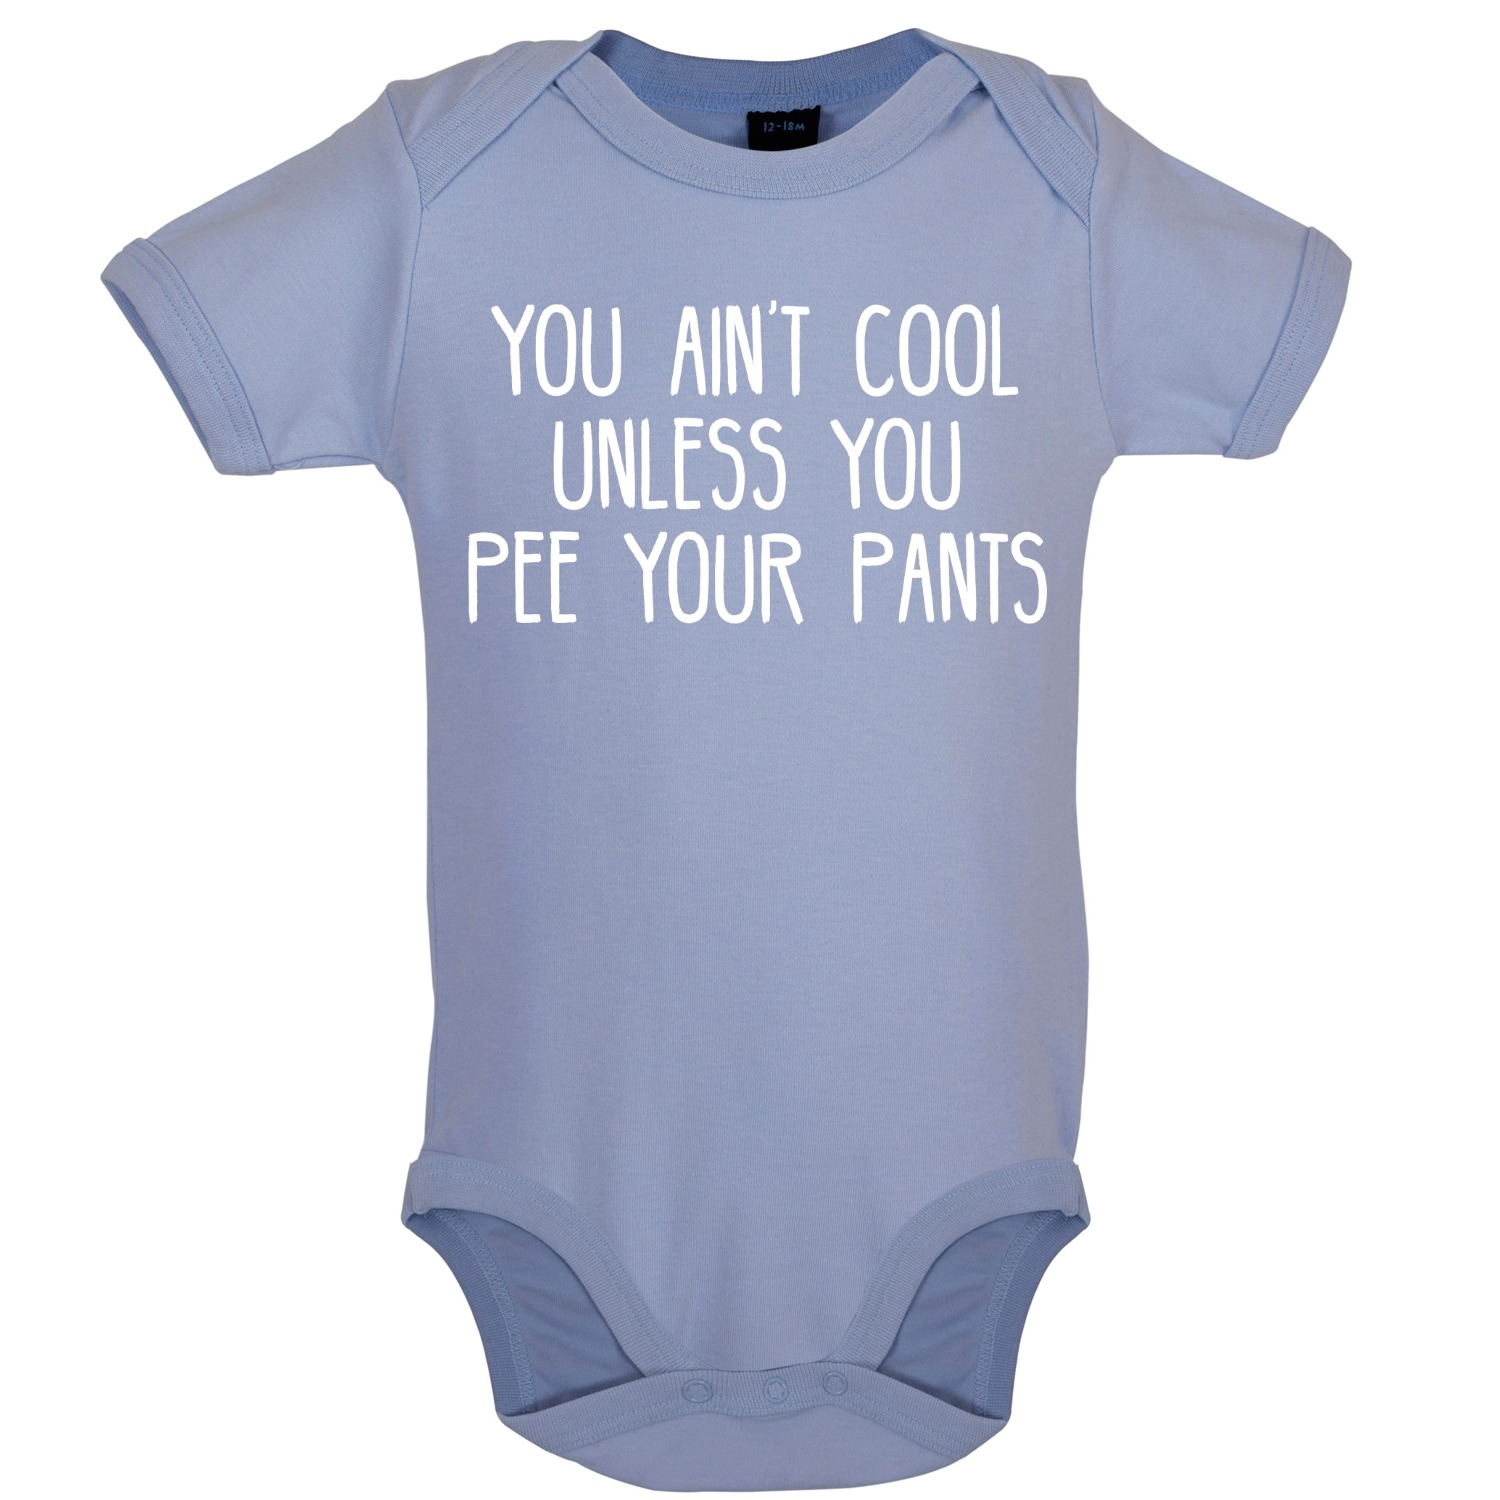 Cool pee your pants baby bodysuit blue.